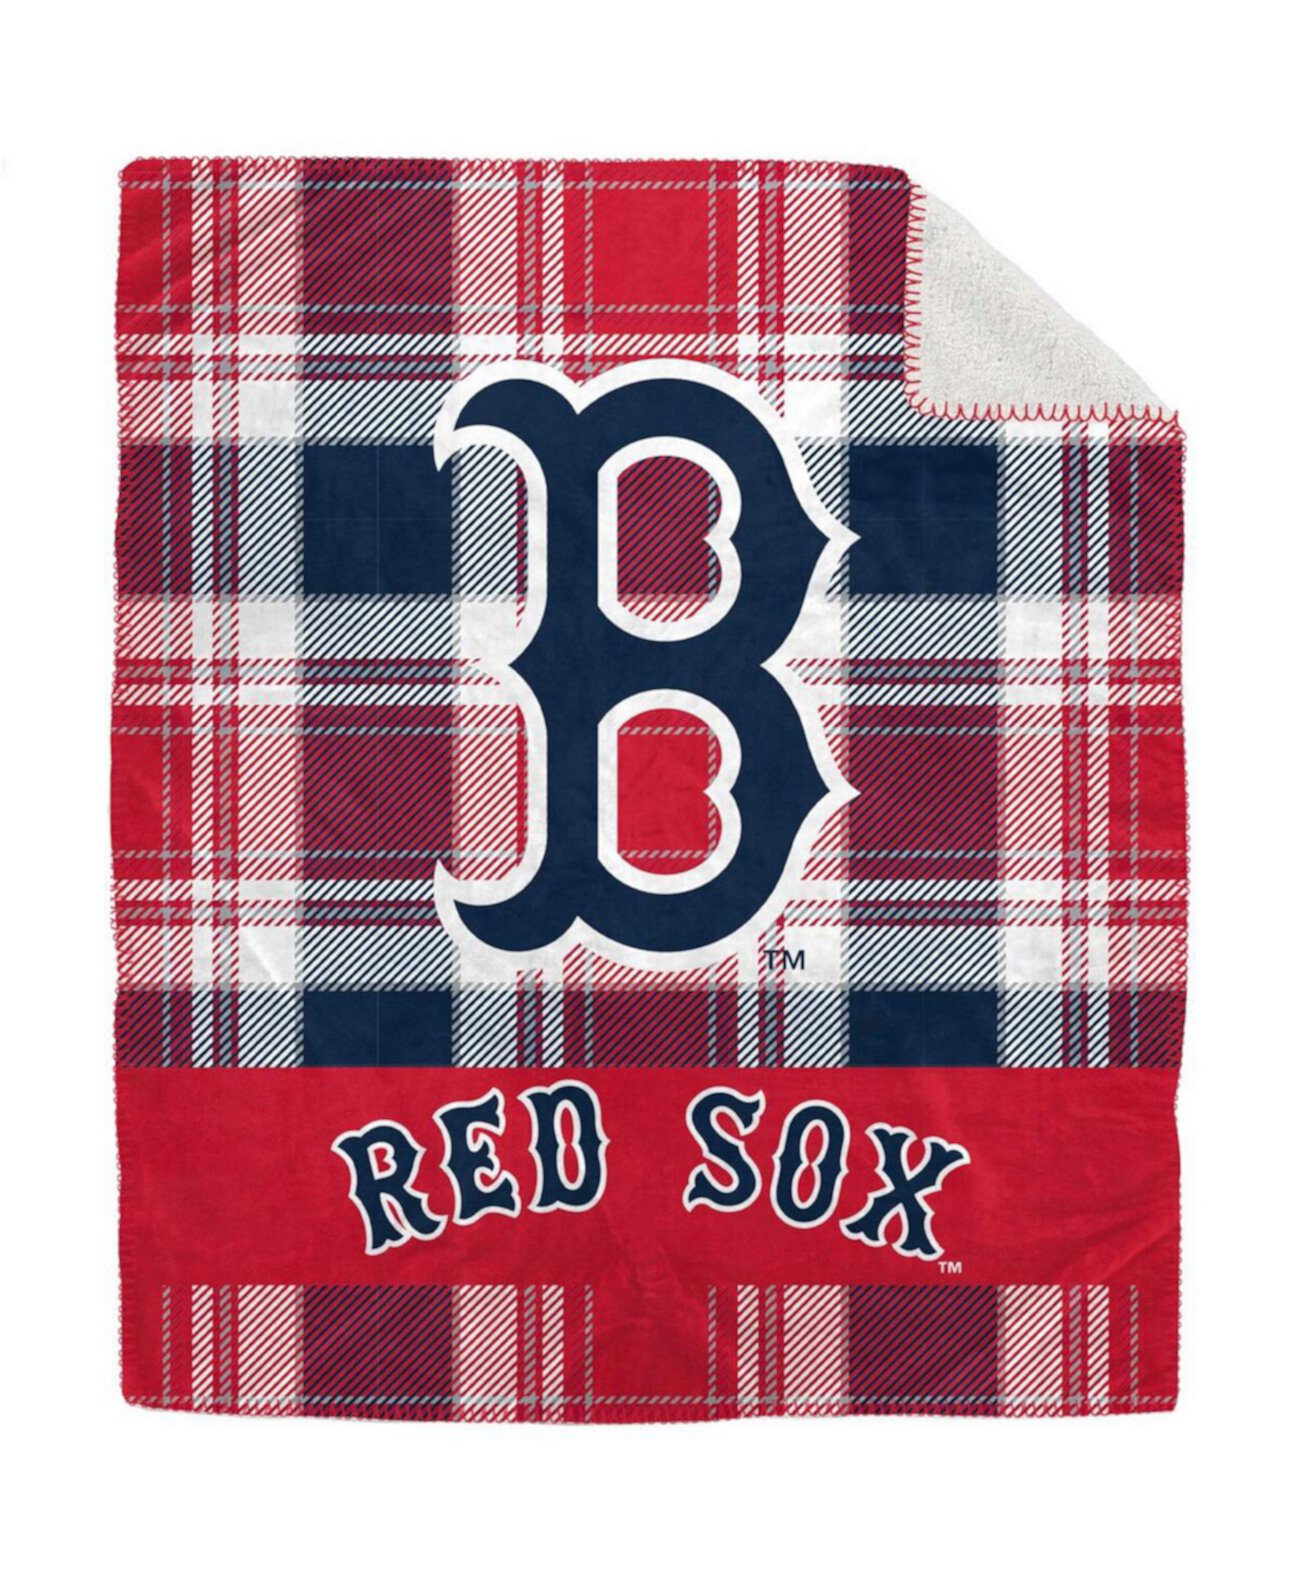 Плюшевое фланелевое одеяло Boston Red Sox размером 50 x 60 дюймов в клетку Pegasus Home Fashions